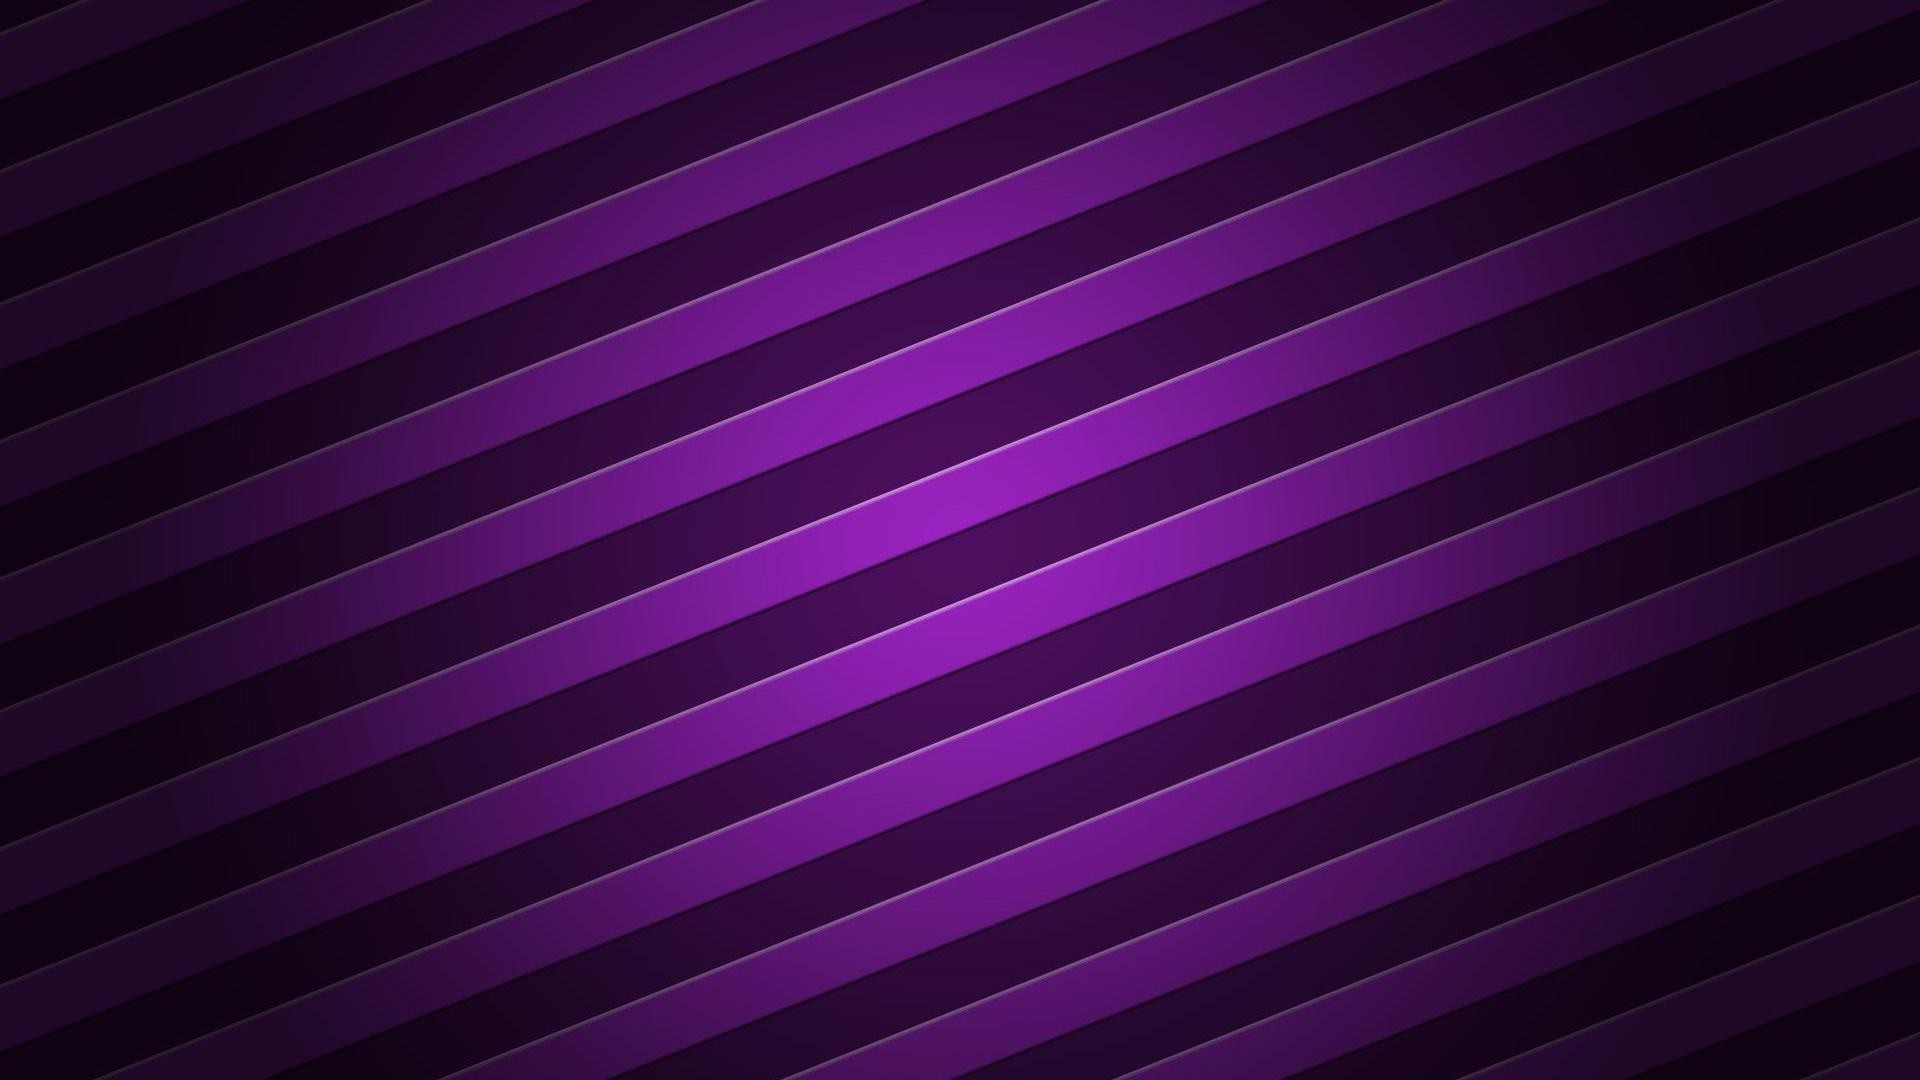 1920x1080  Dazzle purple stripe wallpaper download for desktop wide  wallpapers:1280x800,1440x900,1680x1050